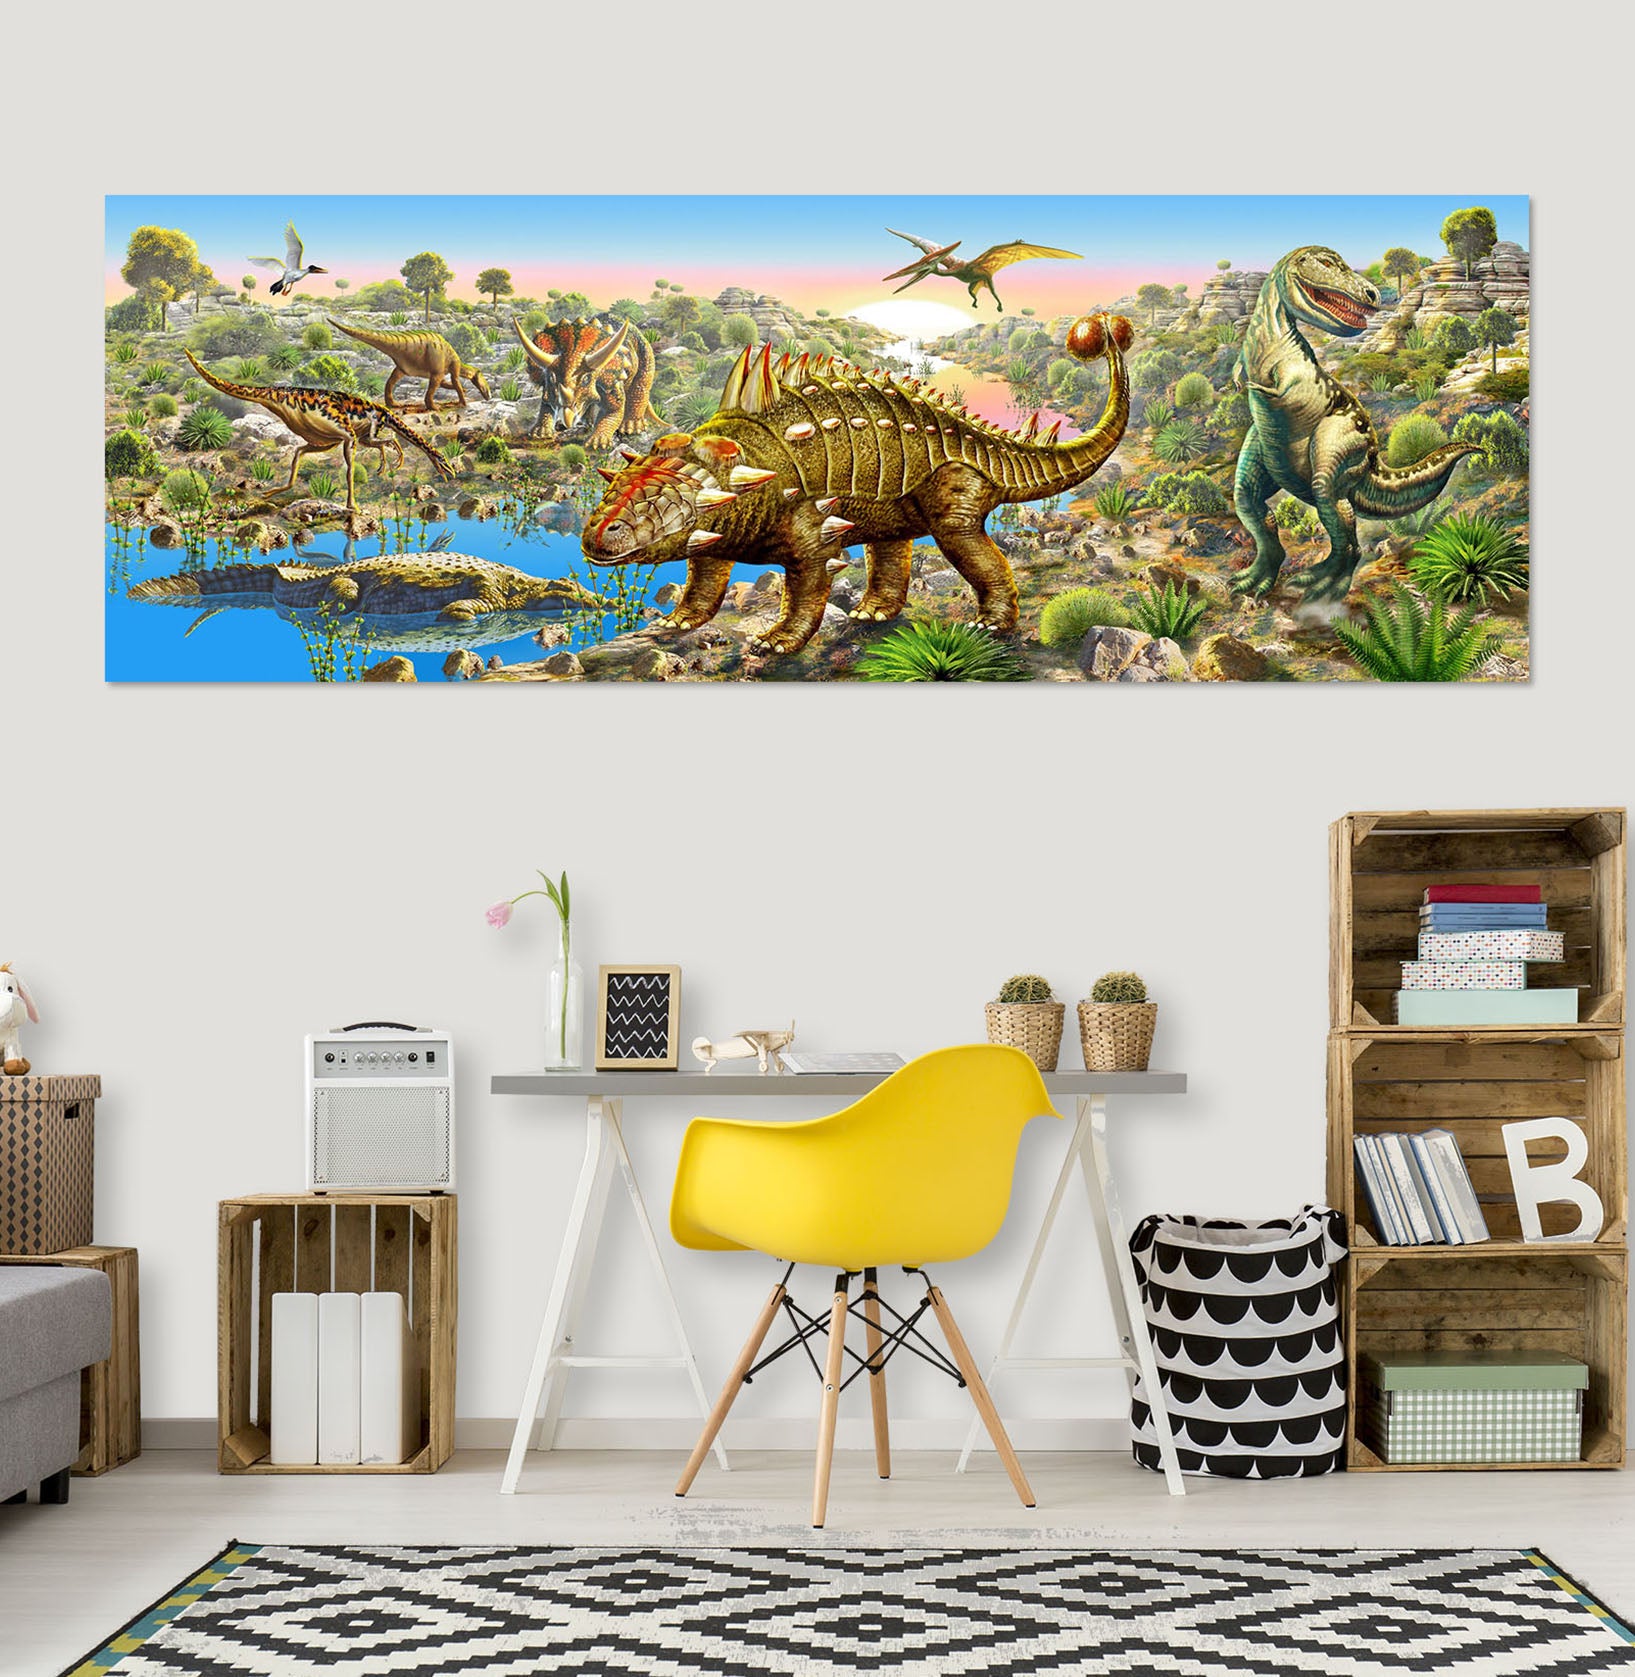 3D Dinosaur World 002 Adrian Chesterman Wall Sticker